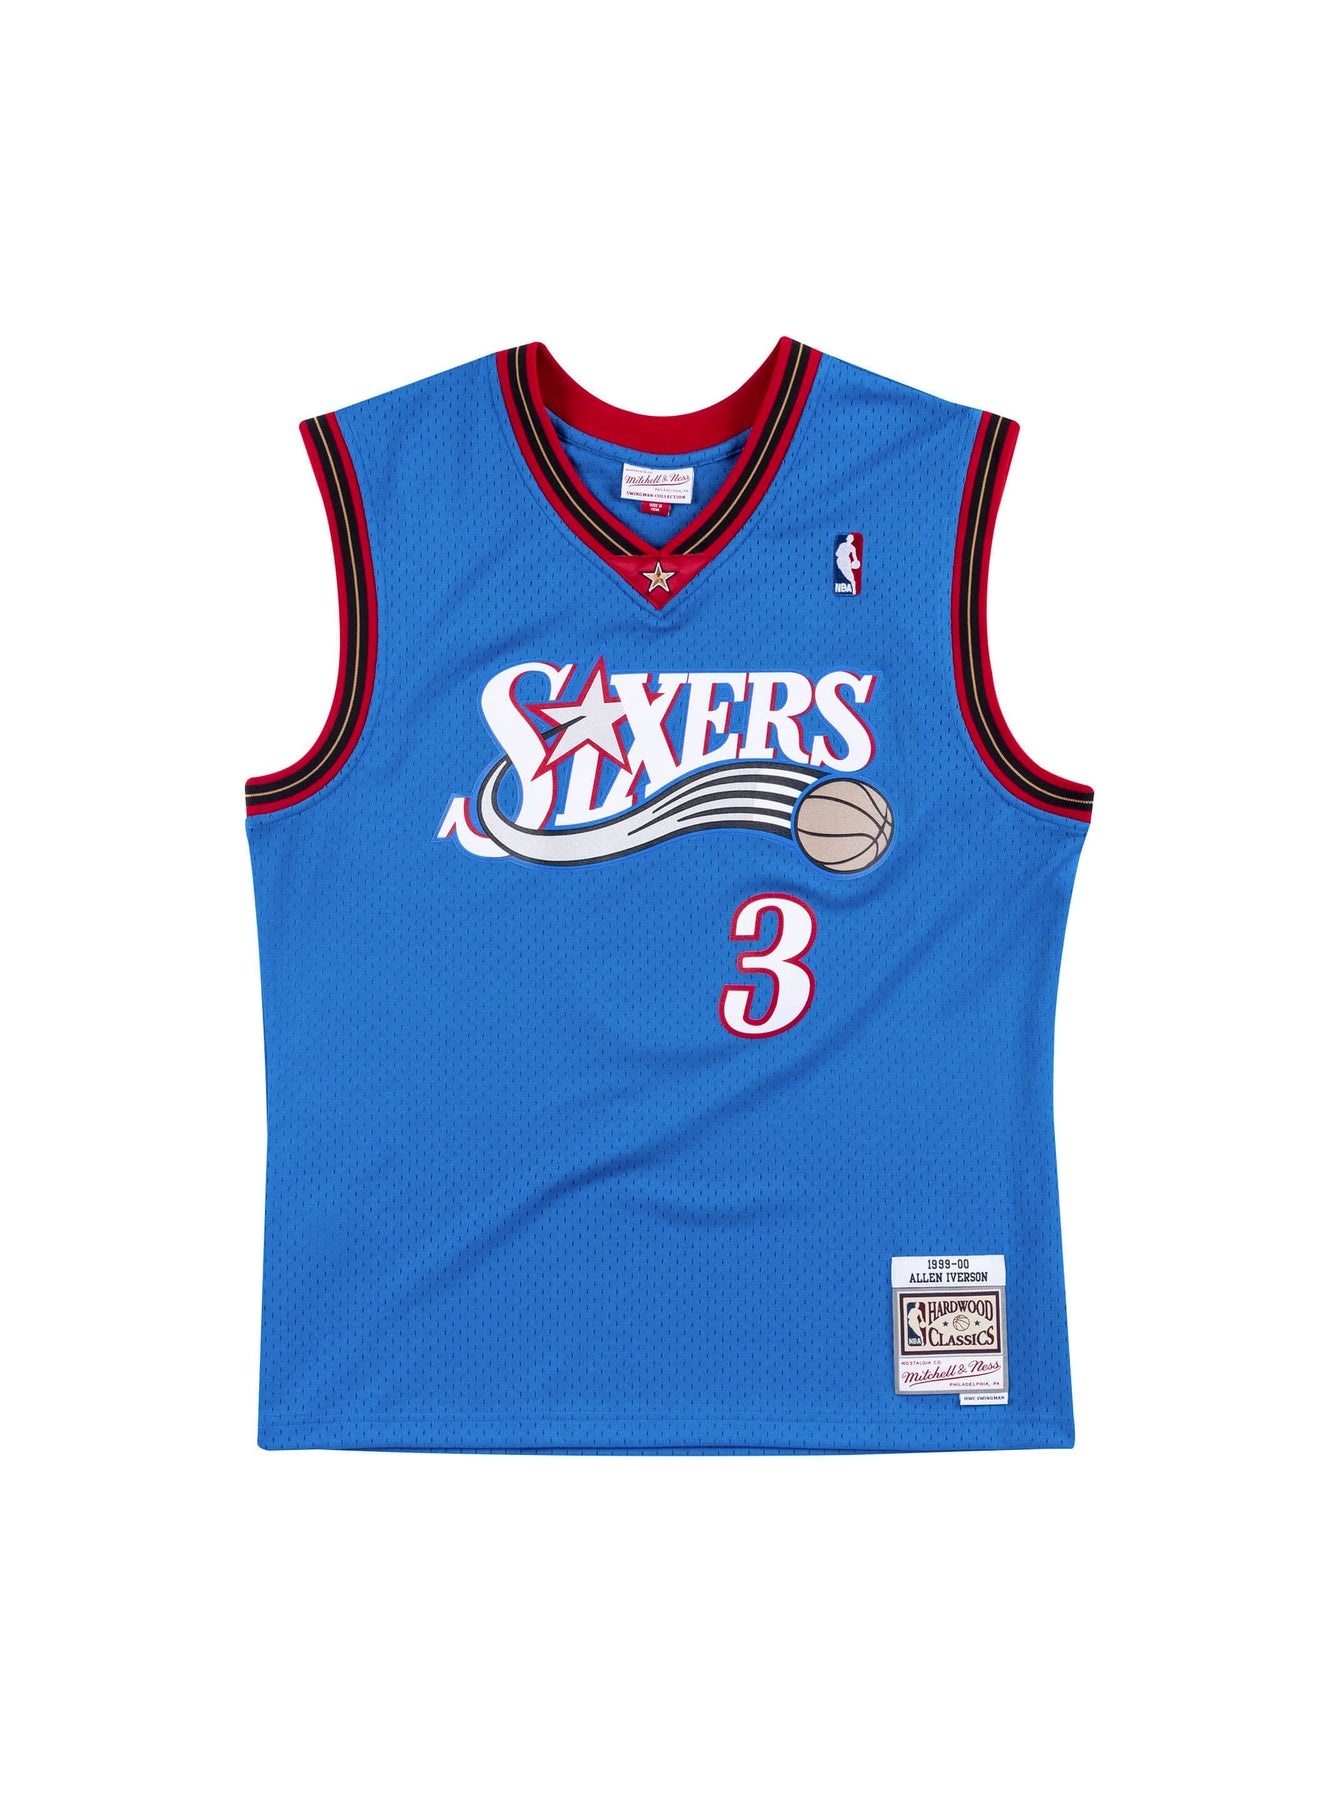 Sixers Jersey 76ers Jersey Basketball Jersey Shirt Philadelphia 76ers Retro, Shop Exile